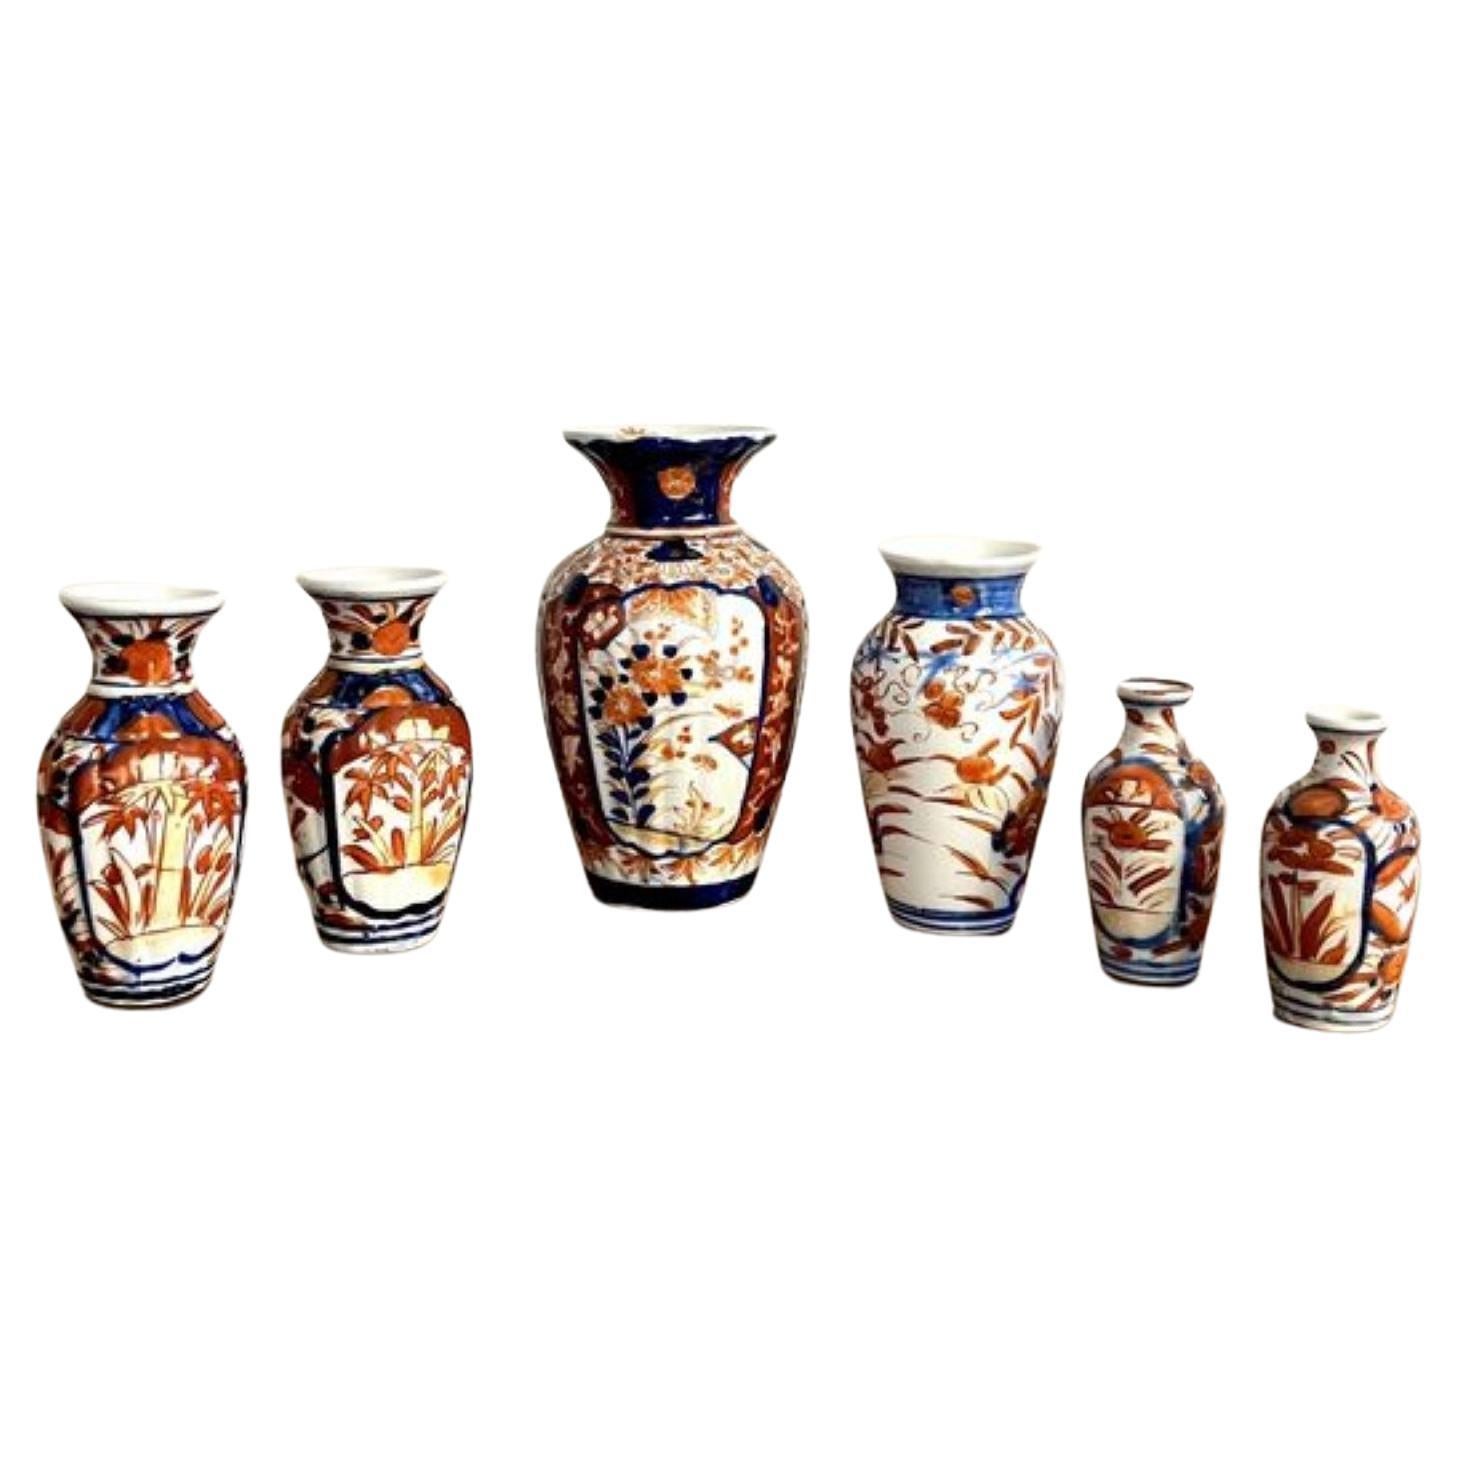 Wonderful collection of six small antique Japanese imari vases